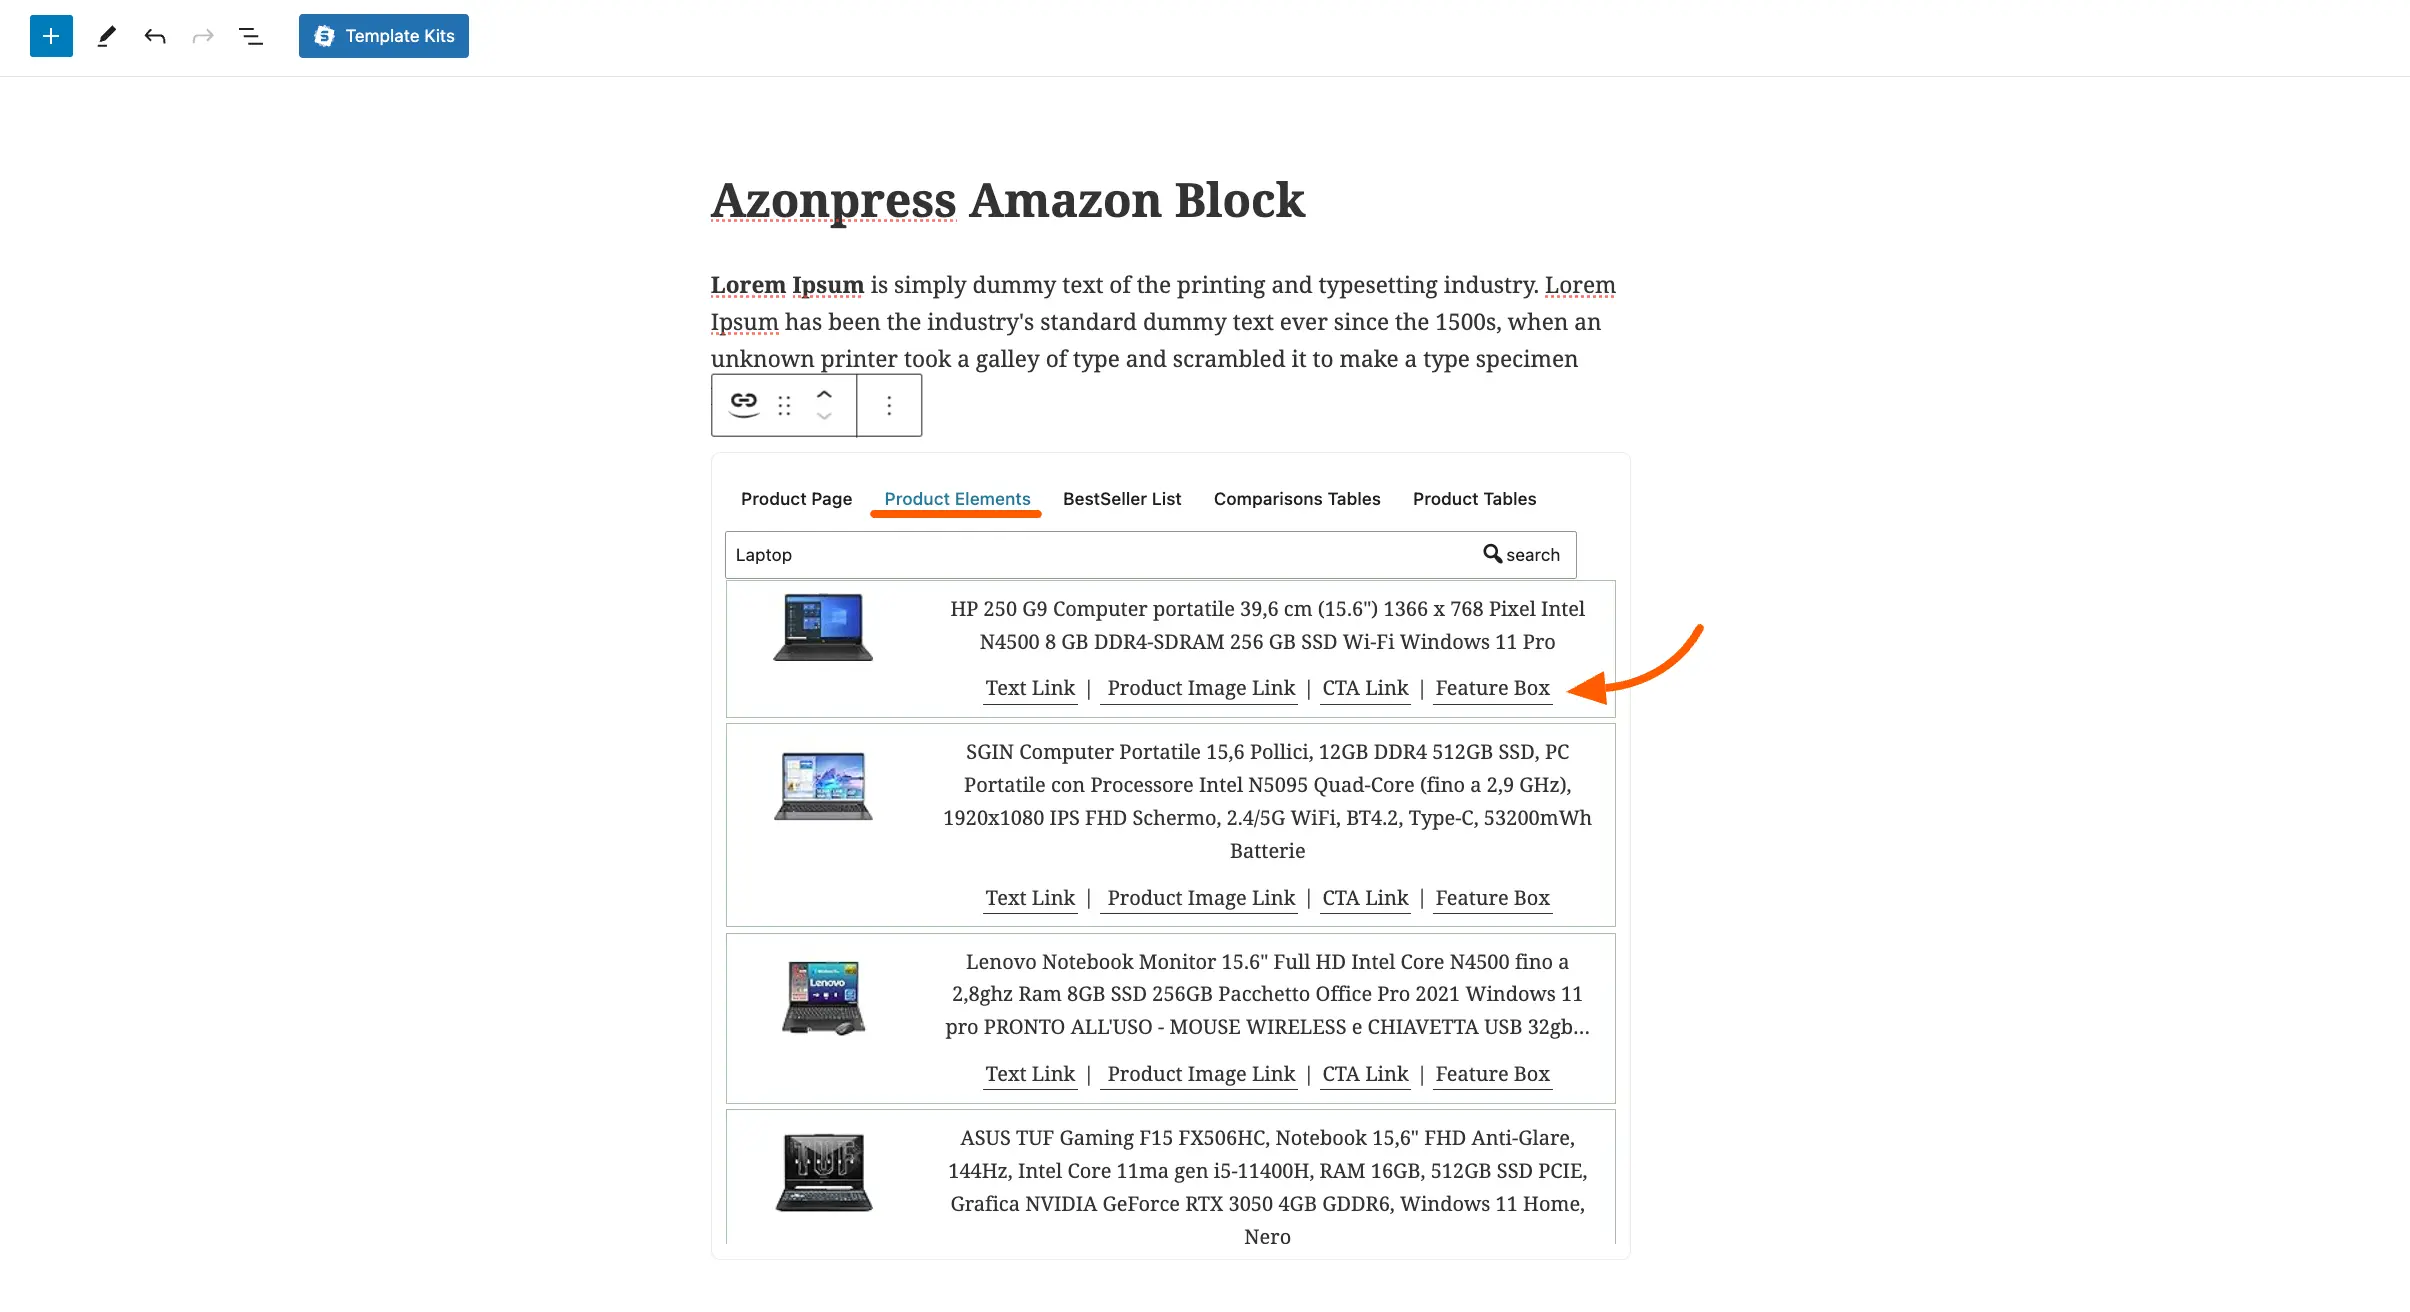 Product-Elements-under-AzonPress-Amazon-Blocks.png